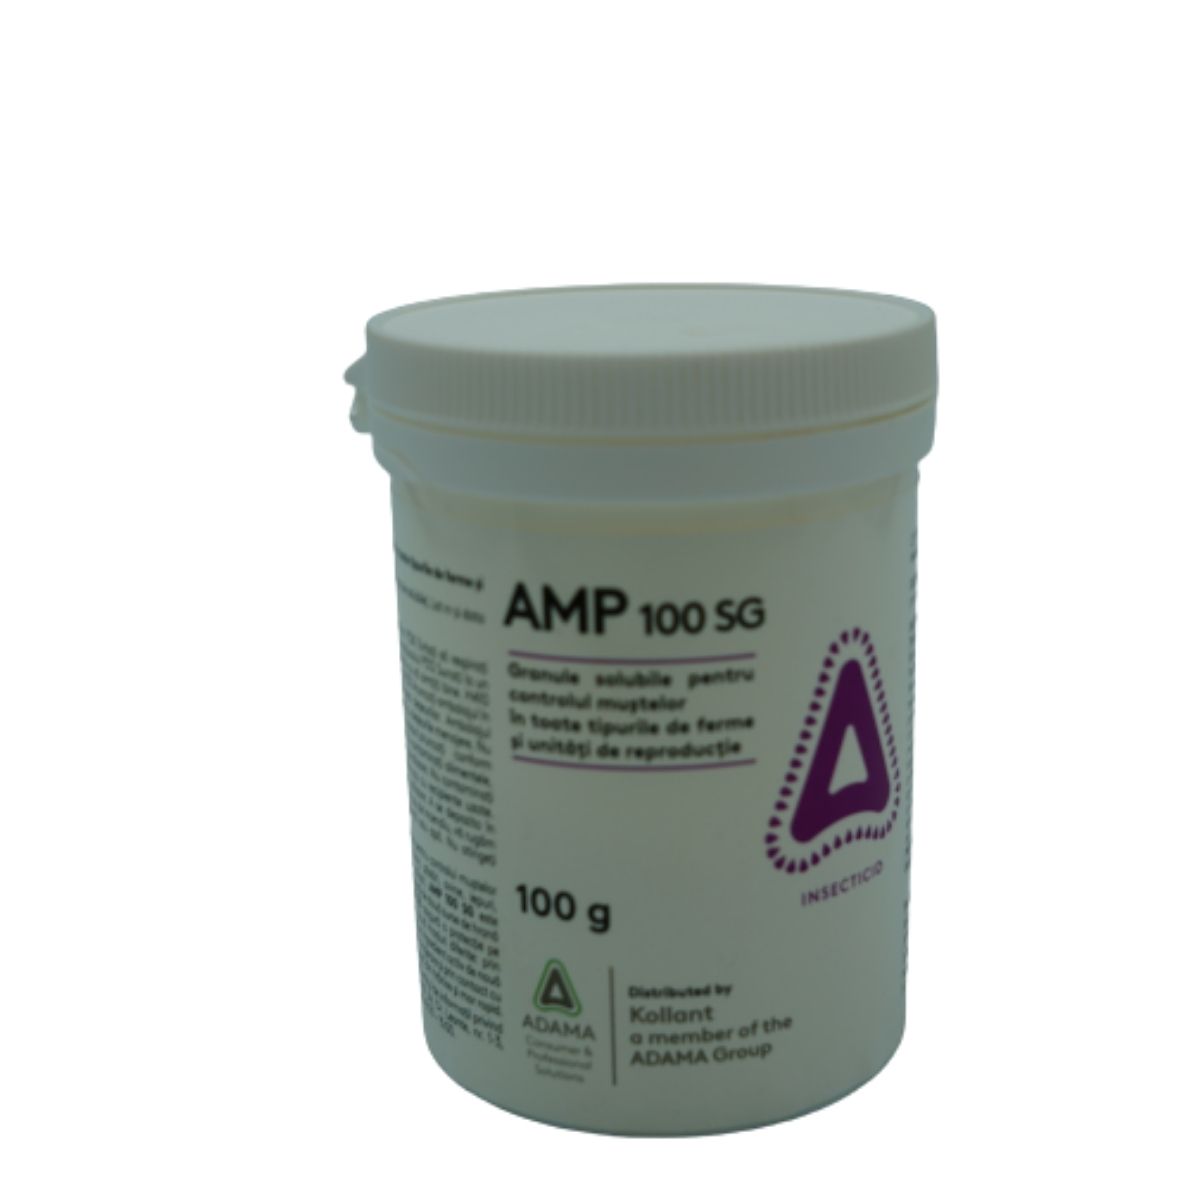 Insecticide - Insecticid pentru combaterea mustelor AMP 100 SG, 100 gr, hectarul.ro